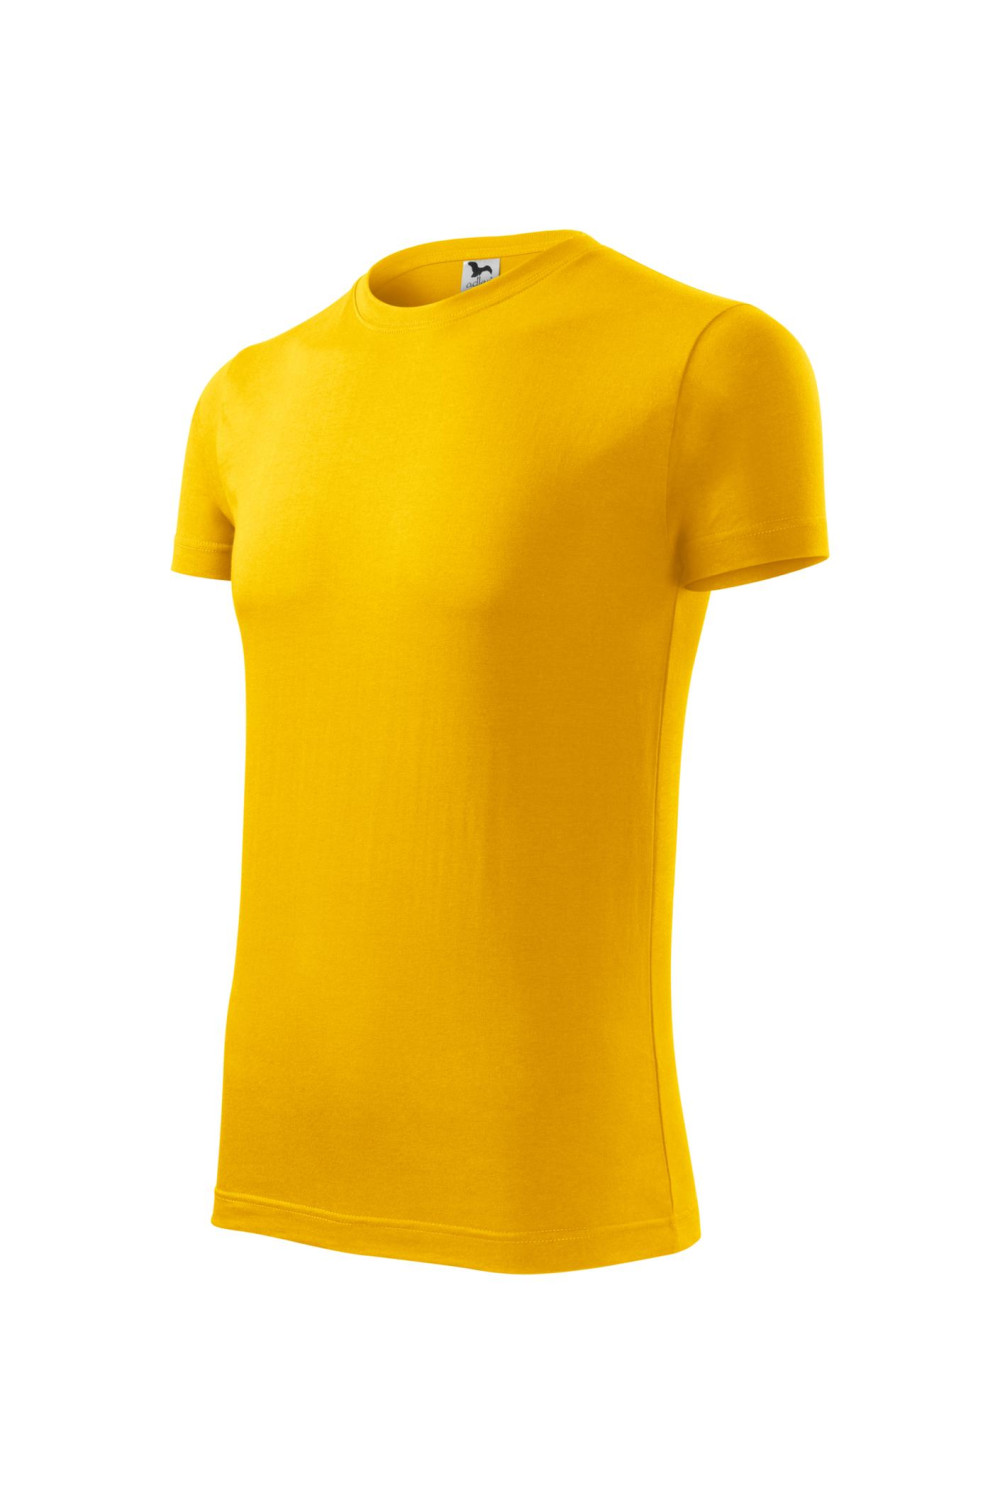 REPLAY 143 MALFINI ADLER Koszulka męska 100% bawełna żółty